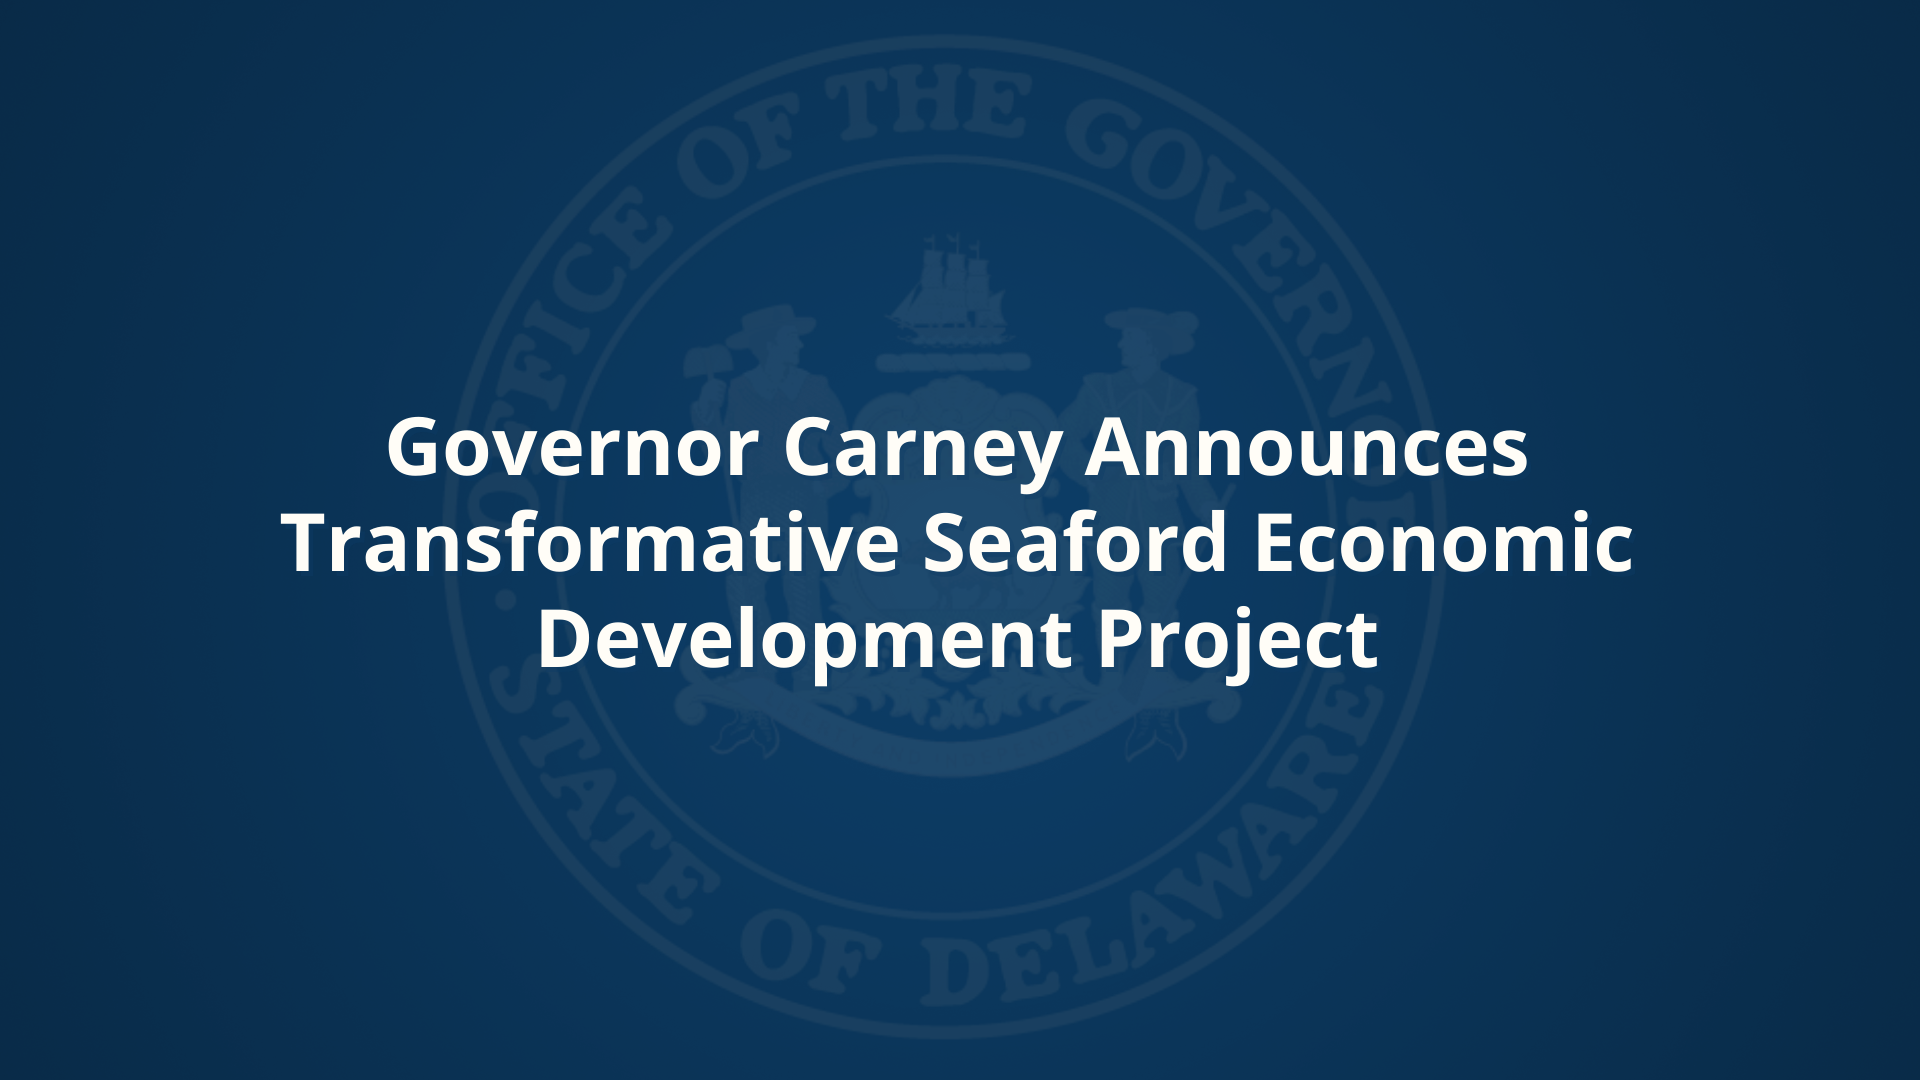 Governor Carney Announces Transformative Seaford Economic Development Project